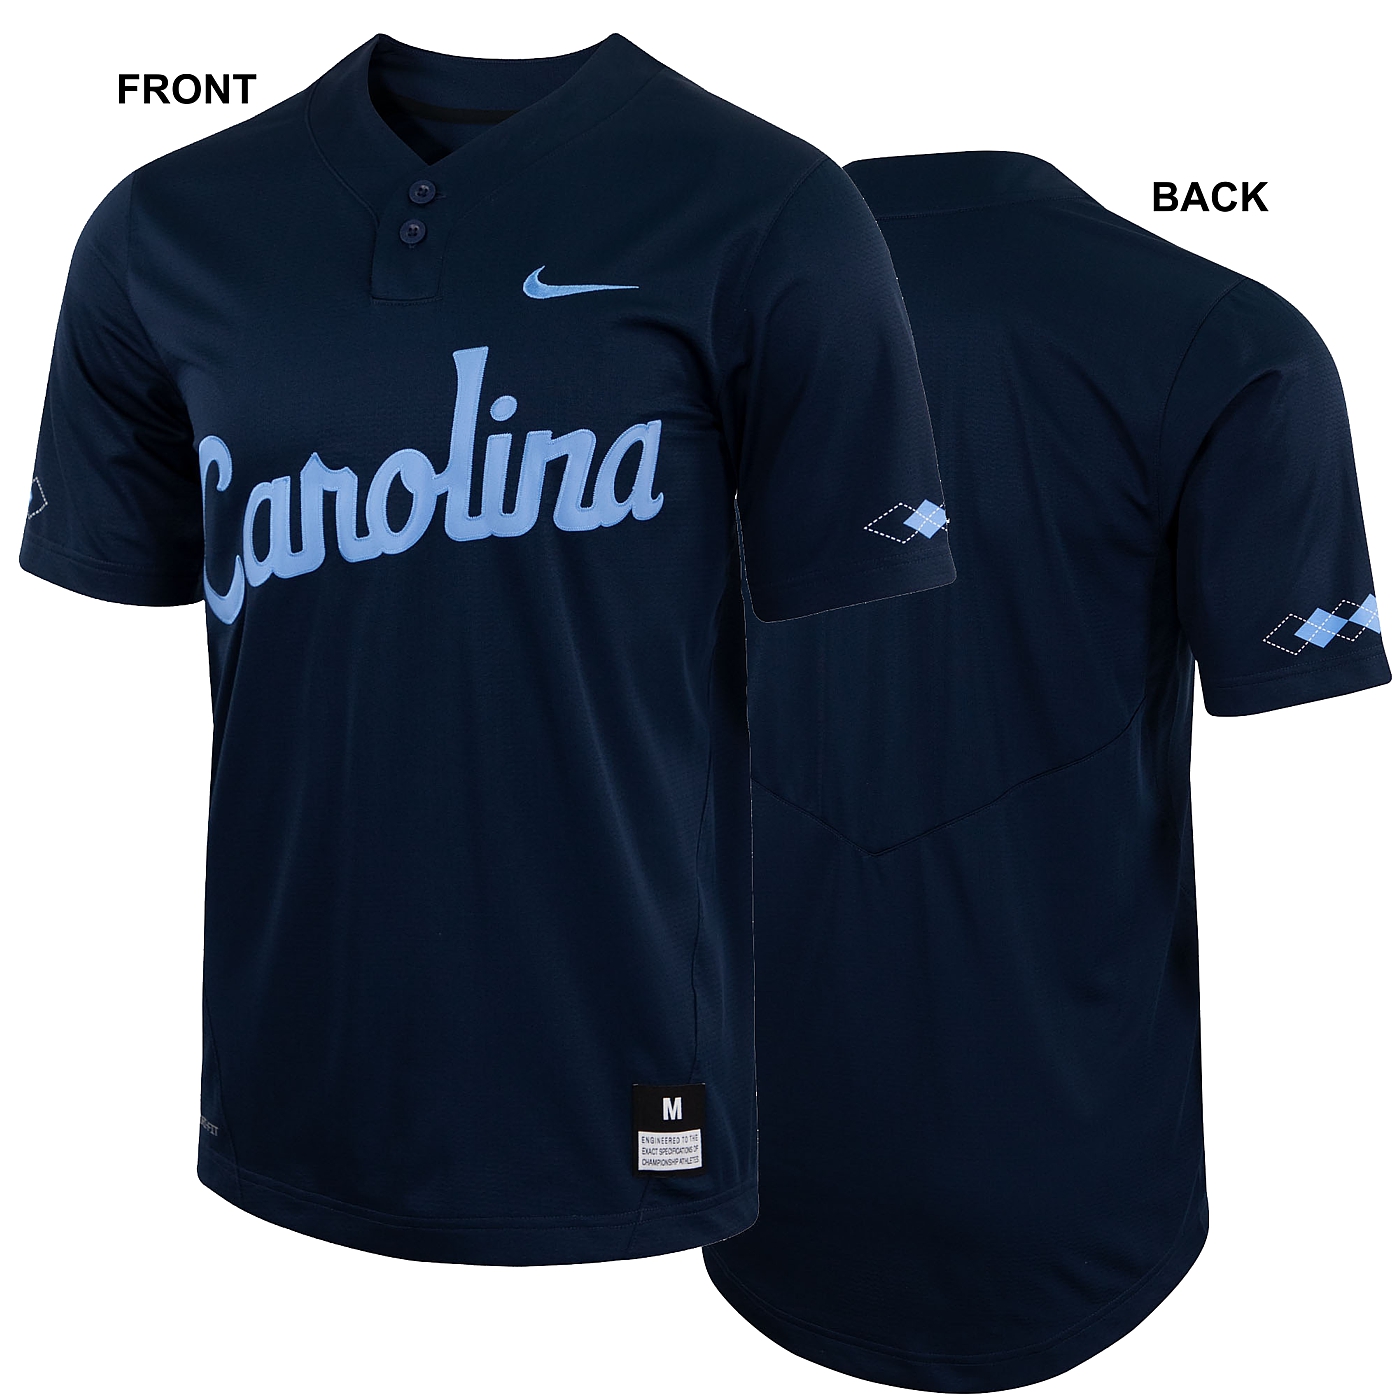 North Carolina Tar Heels Baseball Jersey Shirt - Perfect Gift for Fans -  Bluefink